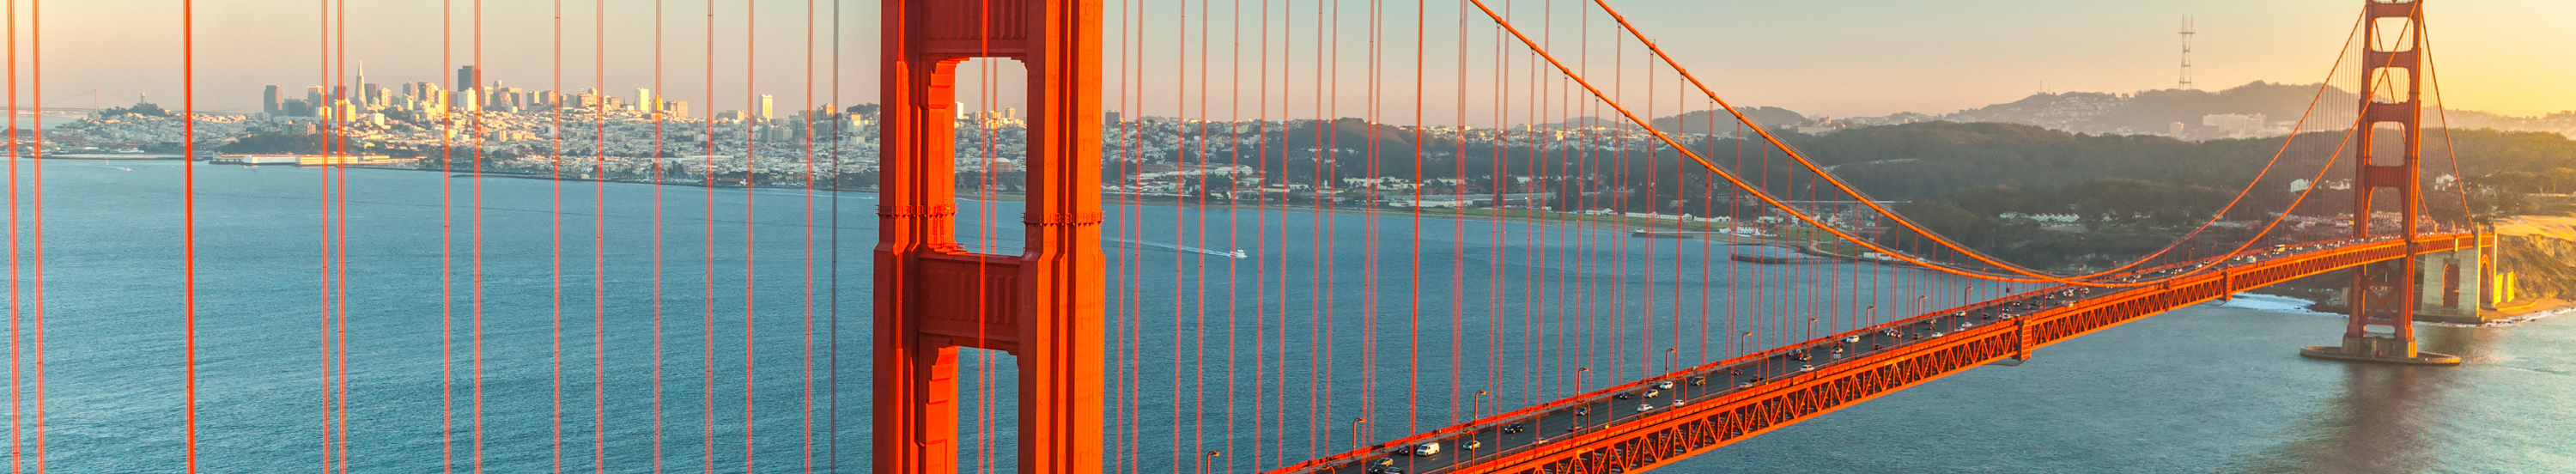 Jembatan Golden Gate, San Francisco